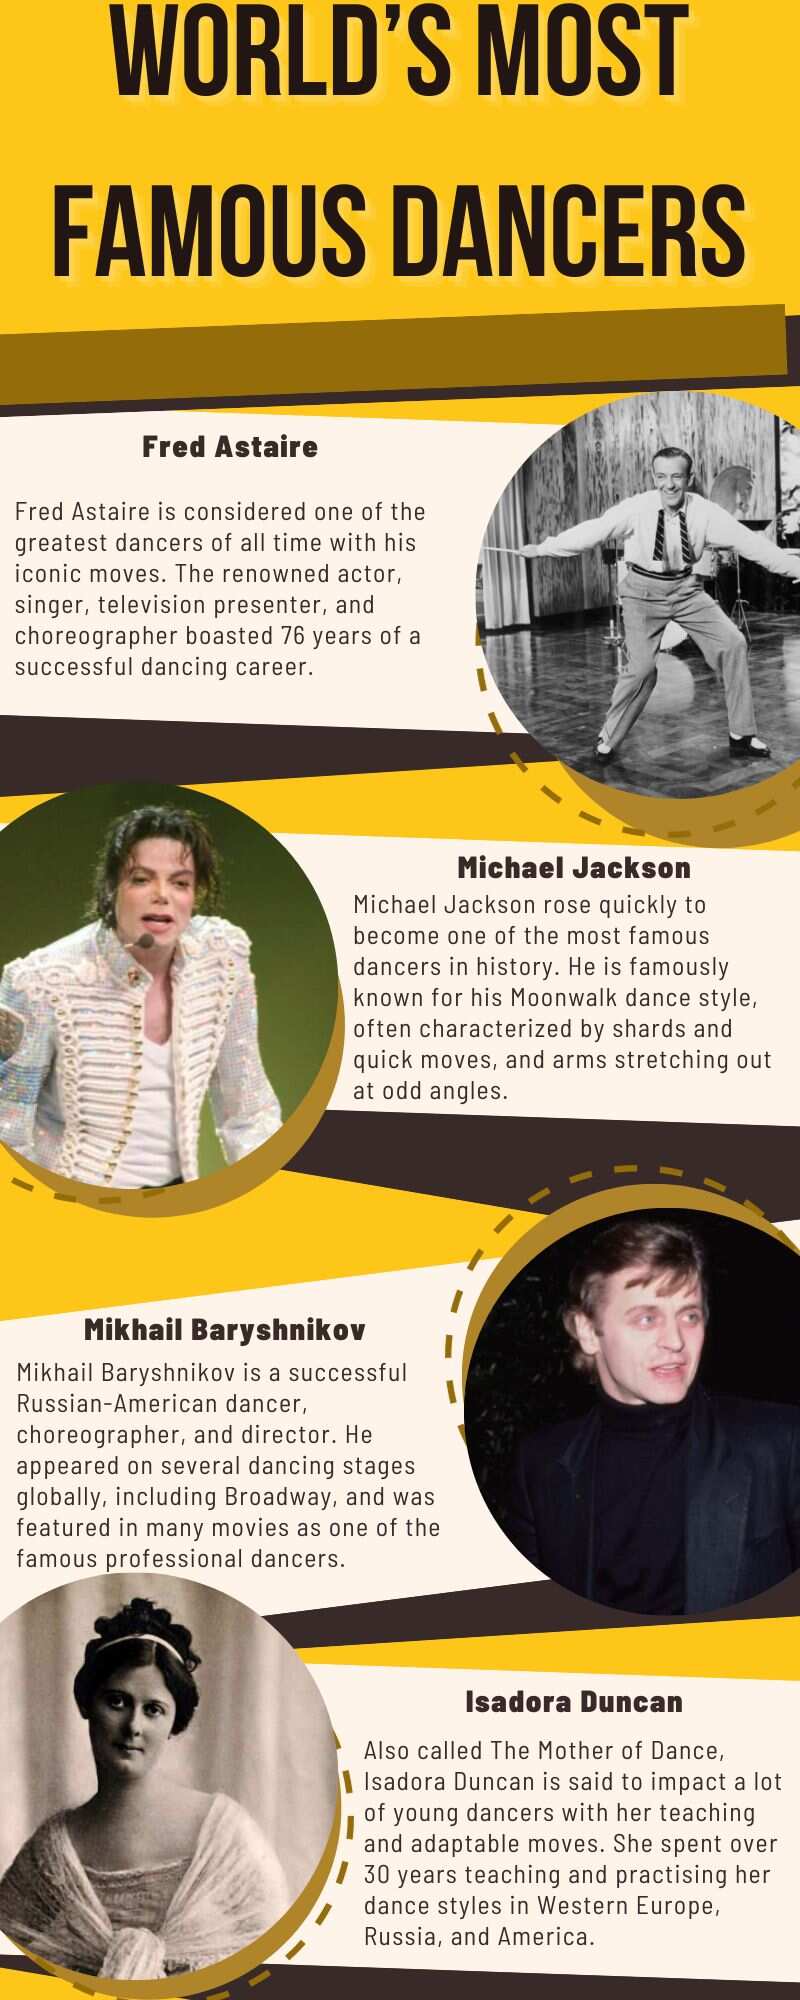 World’s most famous dancers